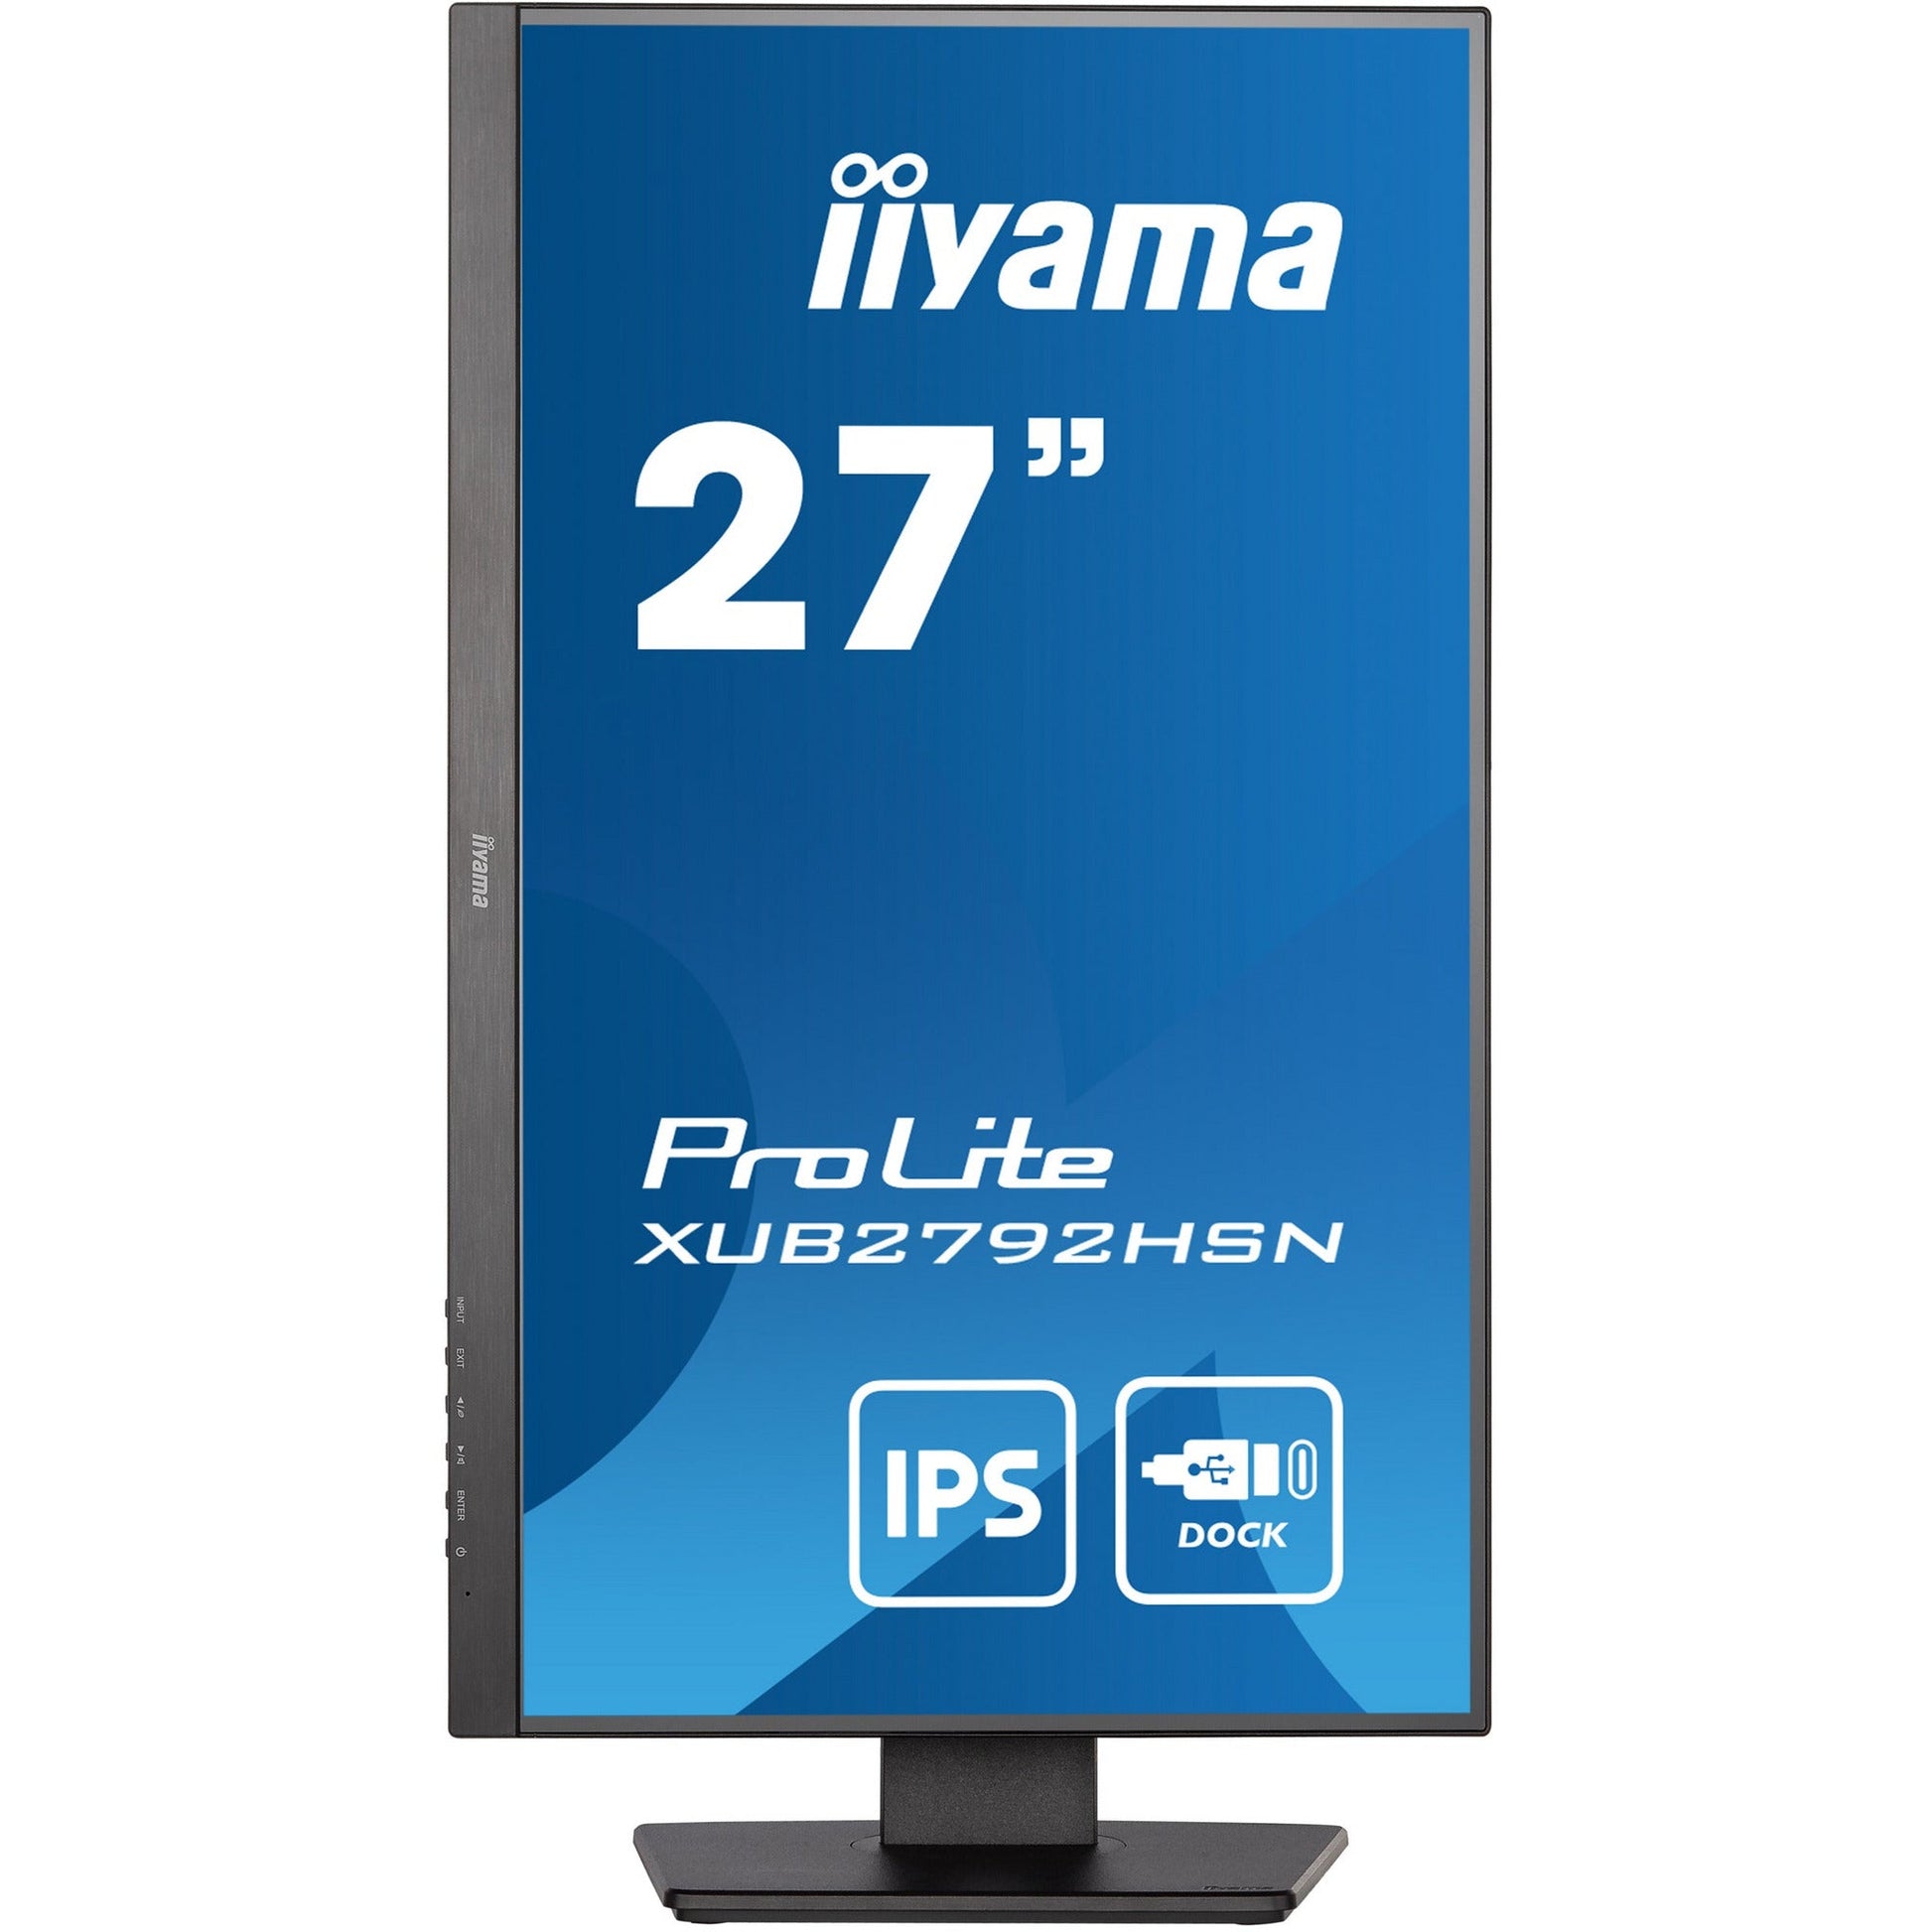 Dark Cyan iiyama ProLite XUB2792HSN-B5 27" IPS LCD Monitor with USB-C dock and RJ45 Port